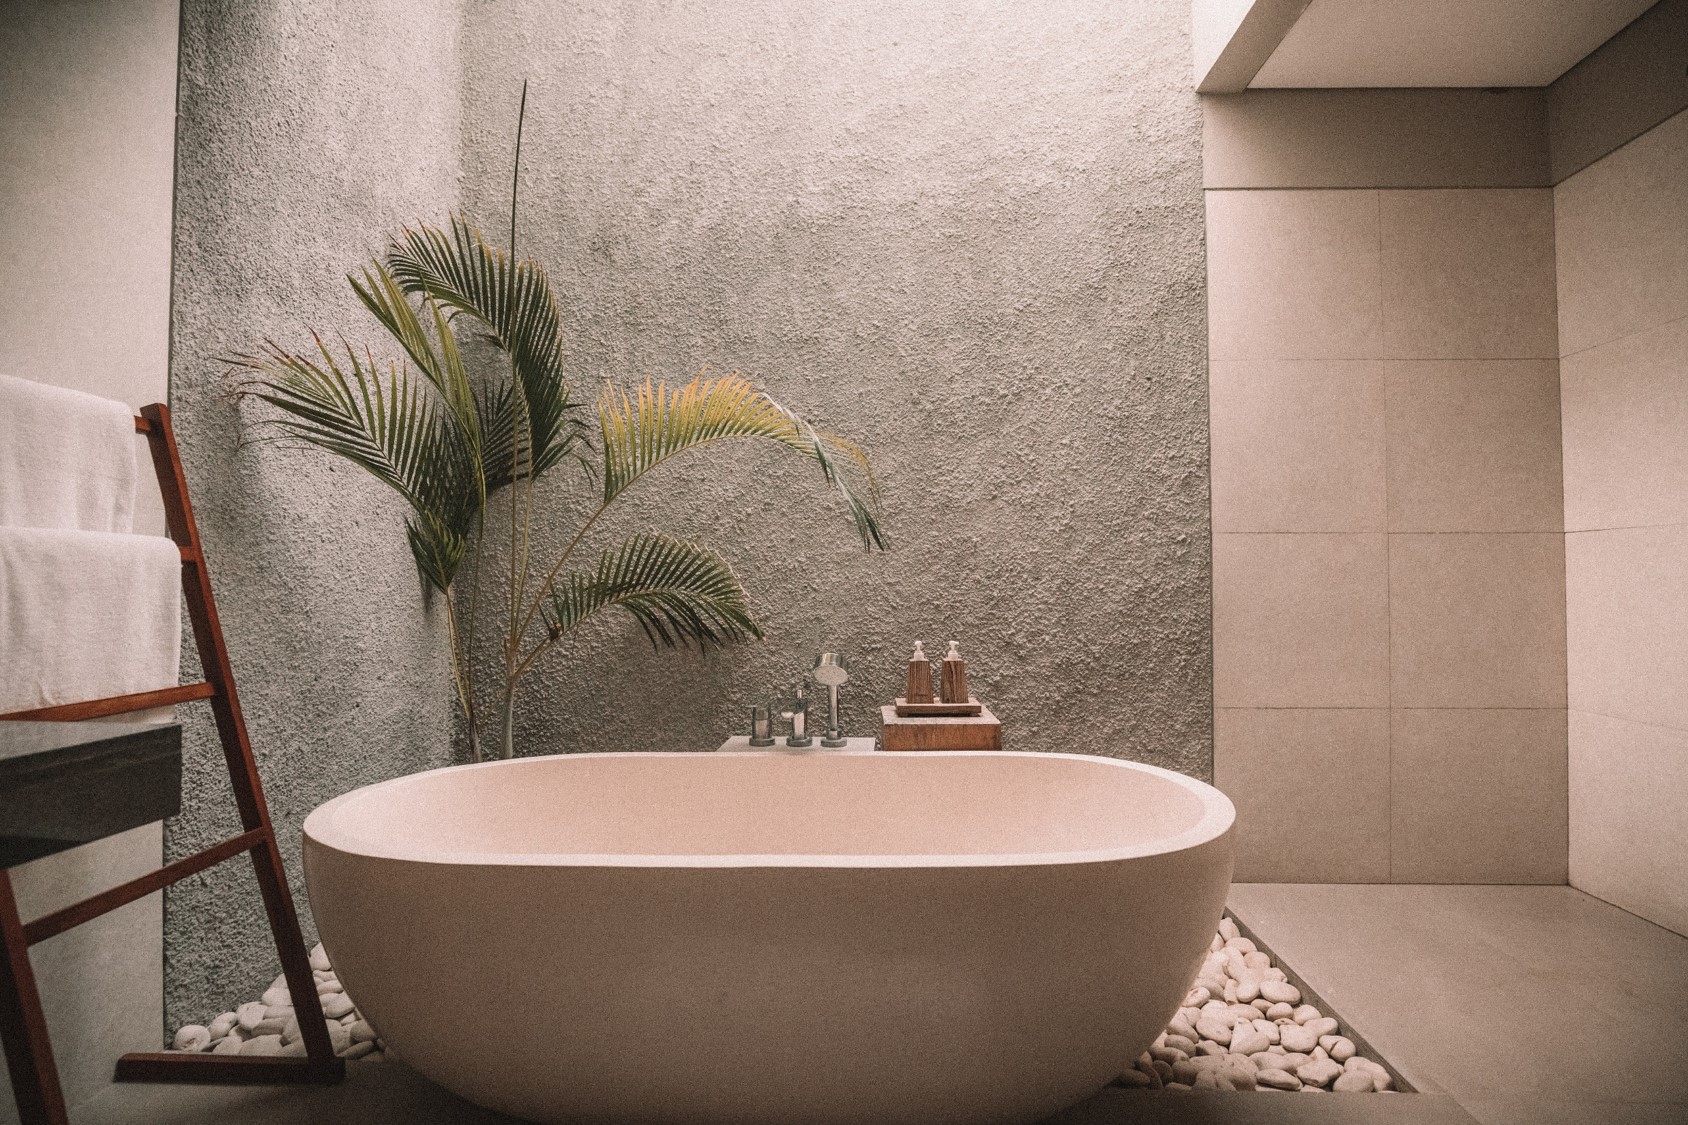 Bath in minimalist room